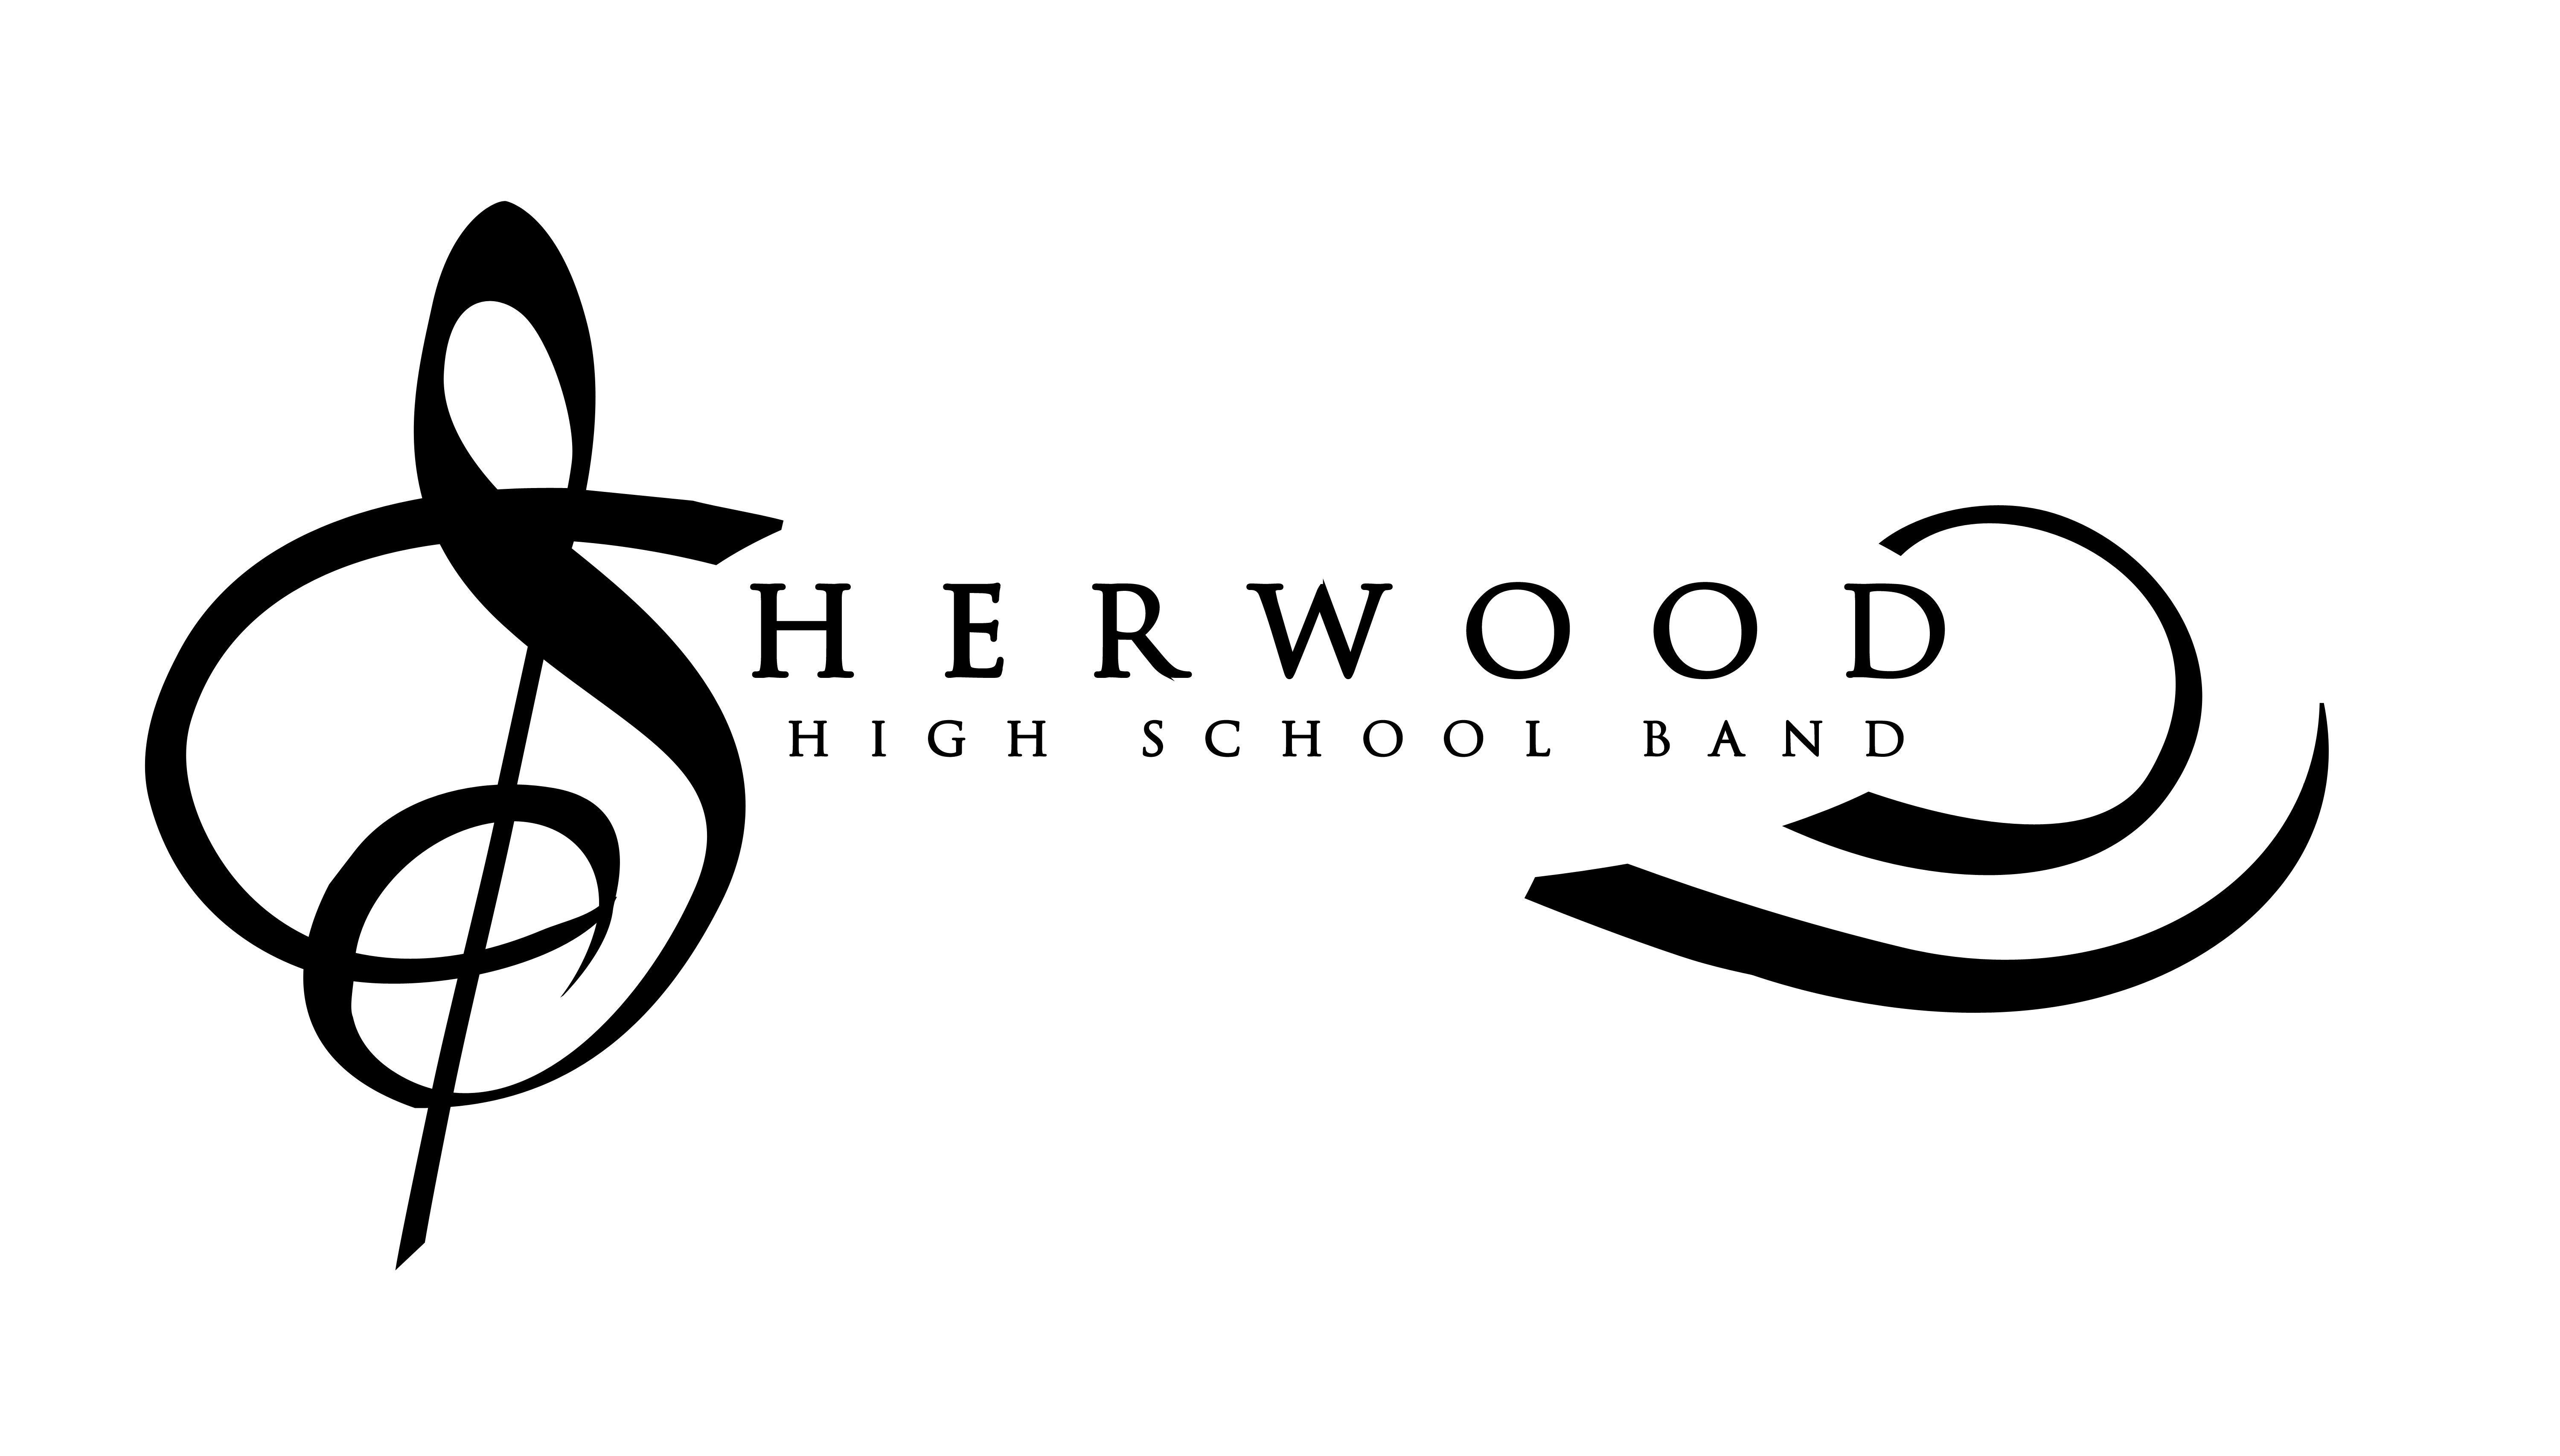 High School Band Logo - Marching Band Banquet Invitation | Sherwood High School Bands